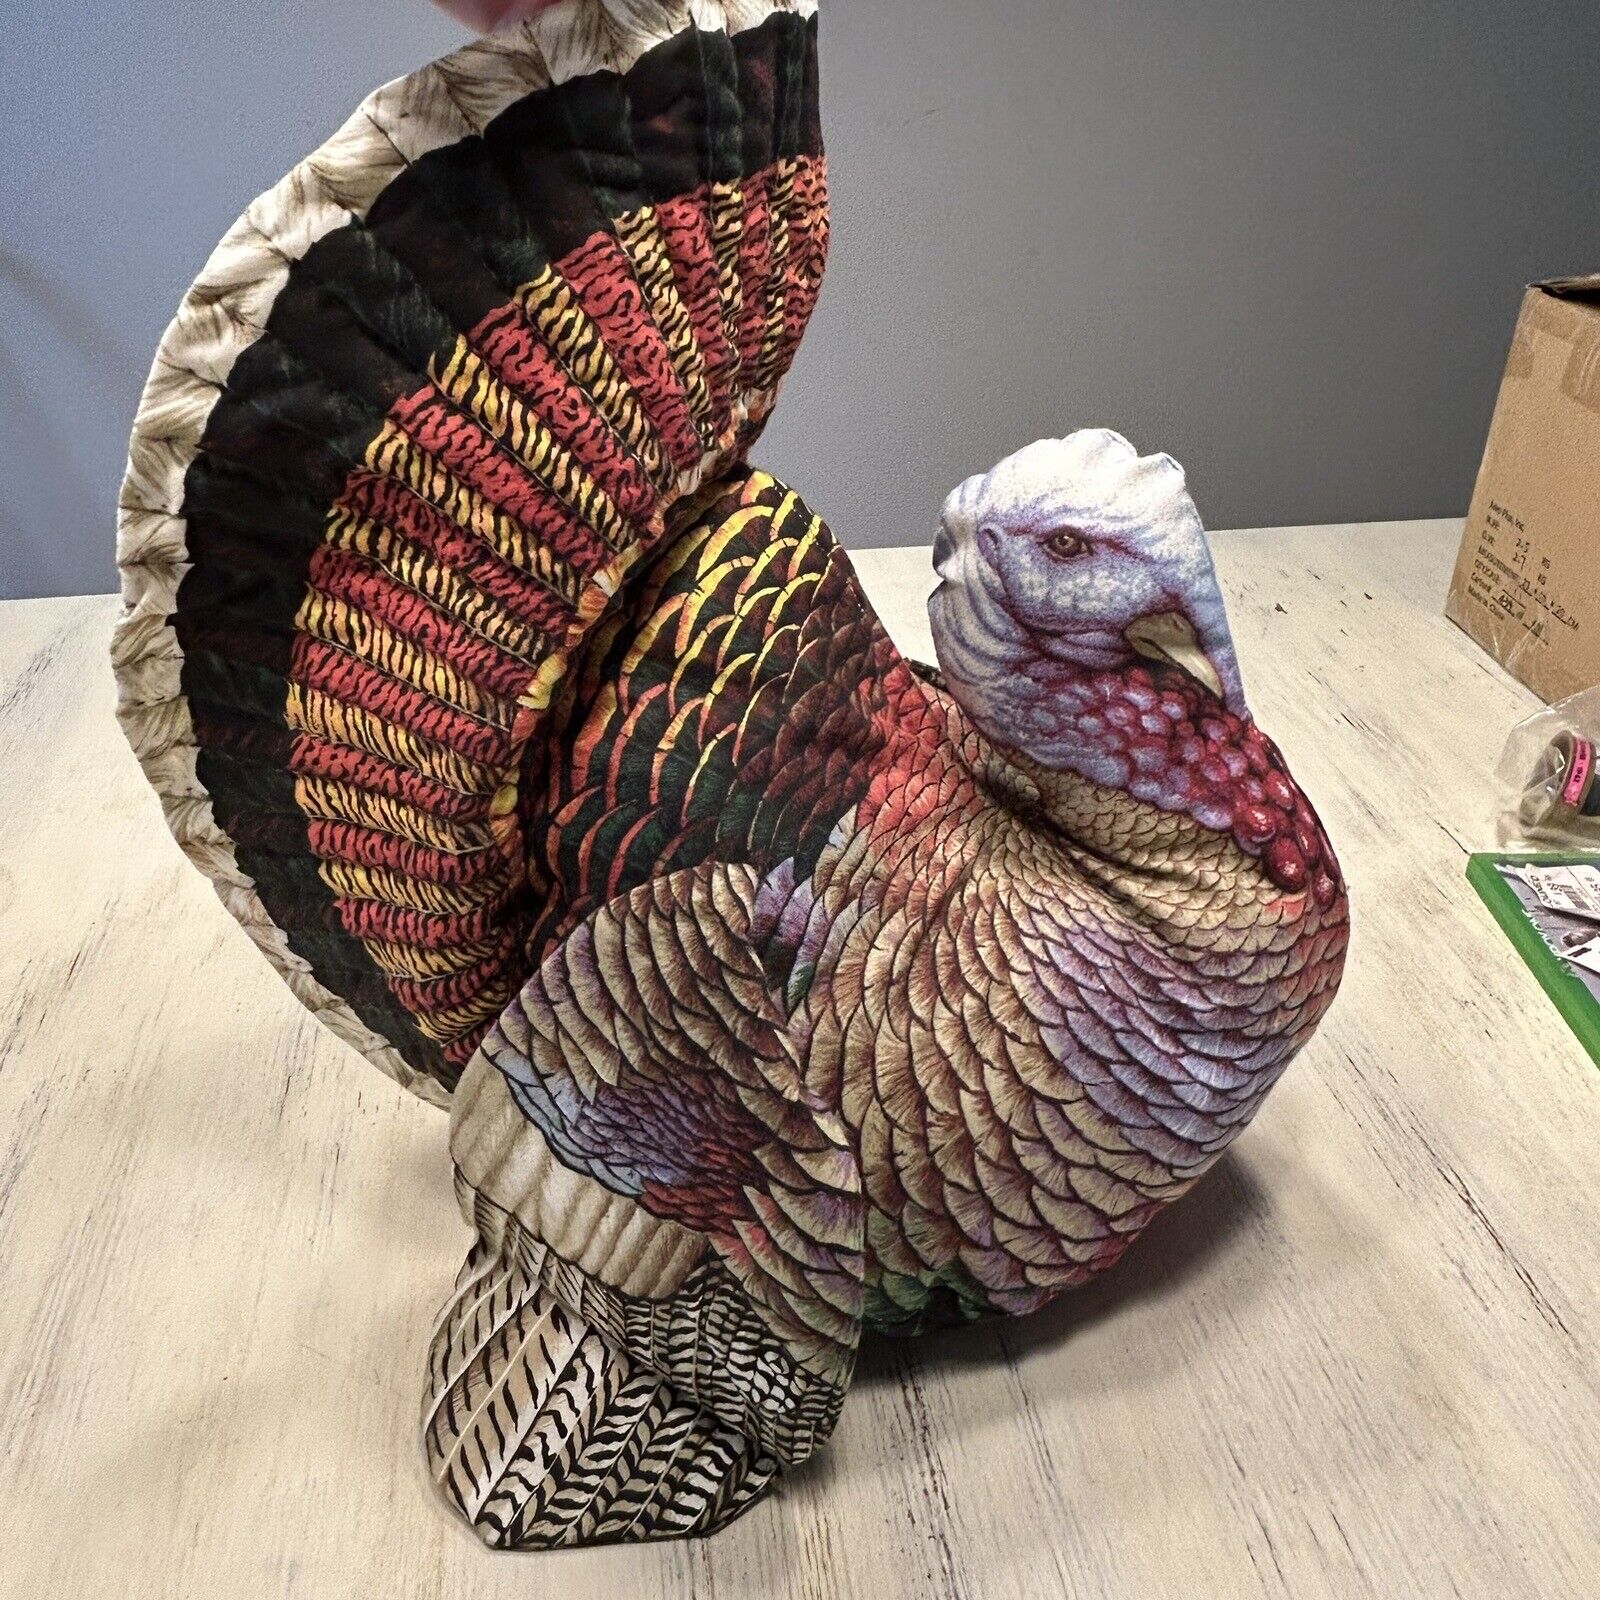 Handmade Stitched Turkey Stuffed Fabric Thanksgiving Fall Decor Realistic 14x12